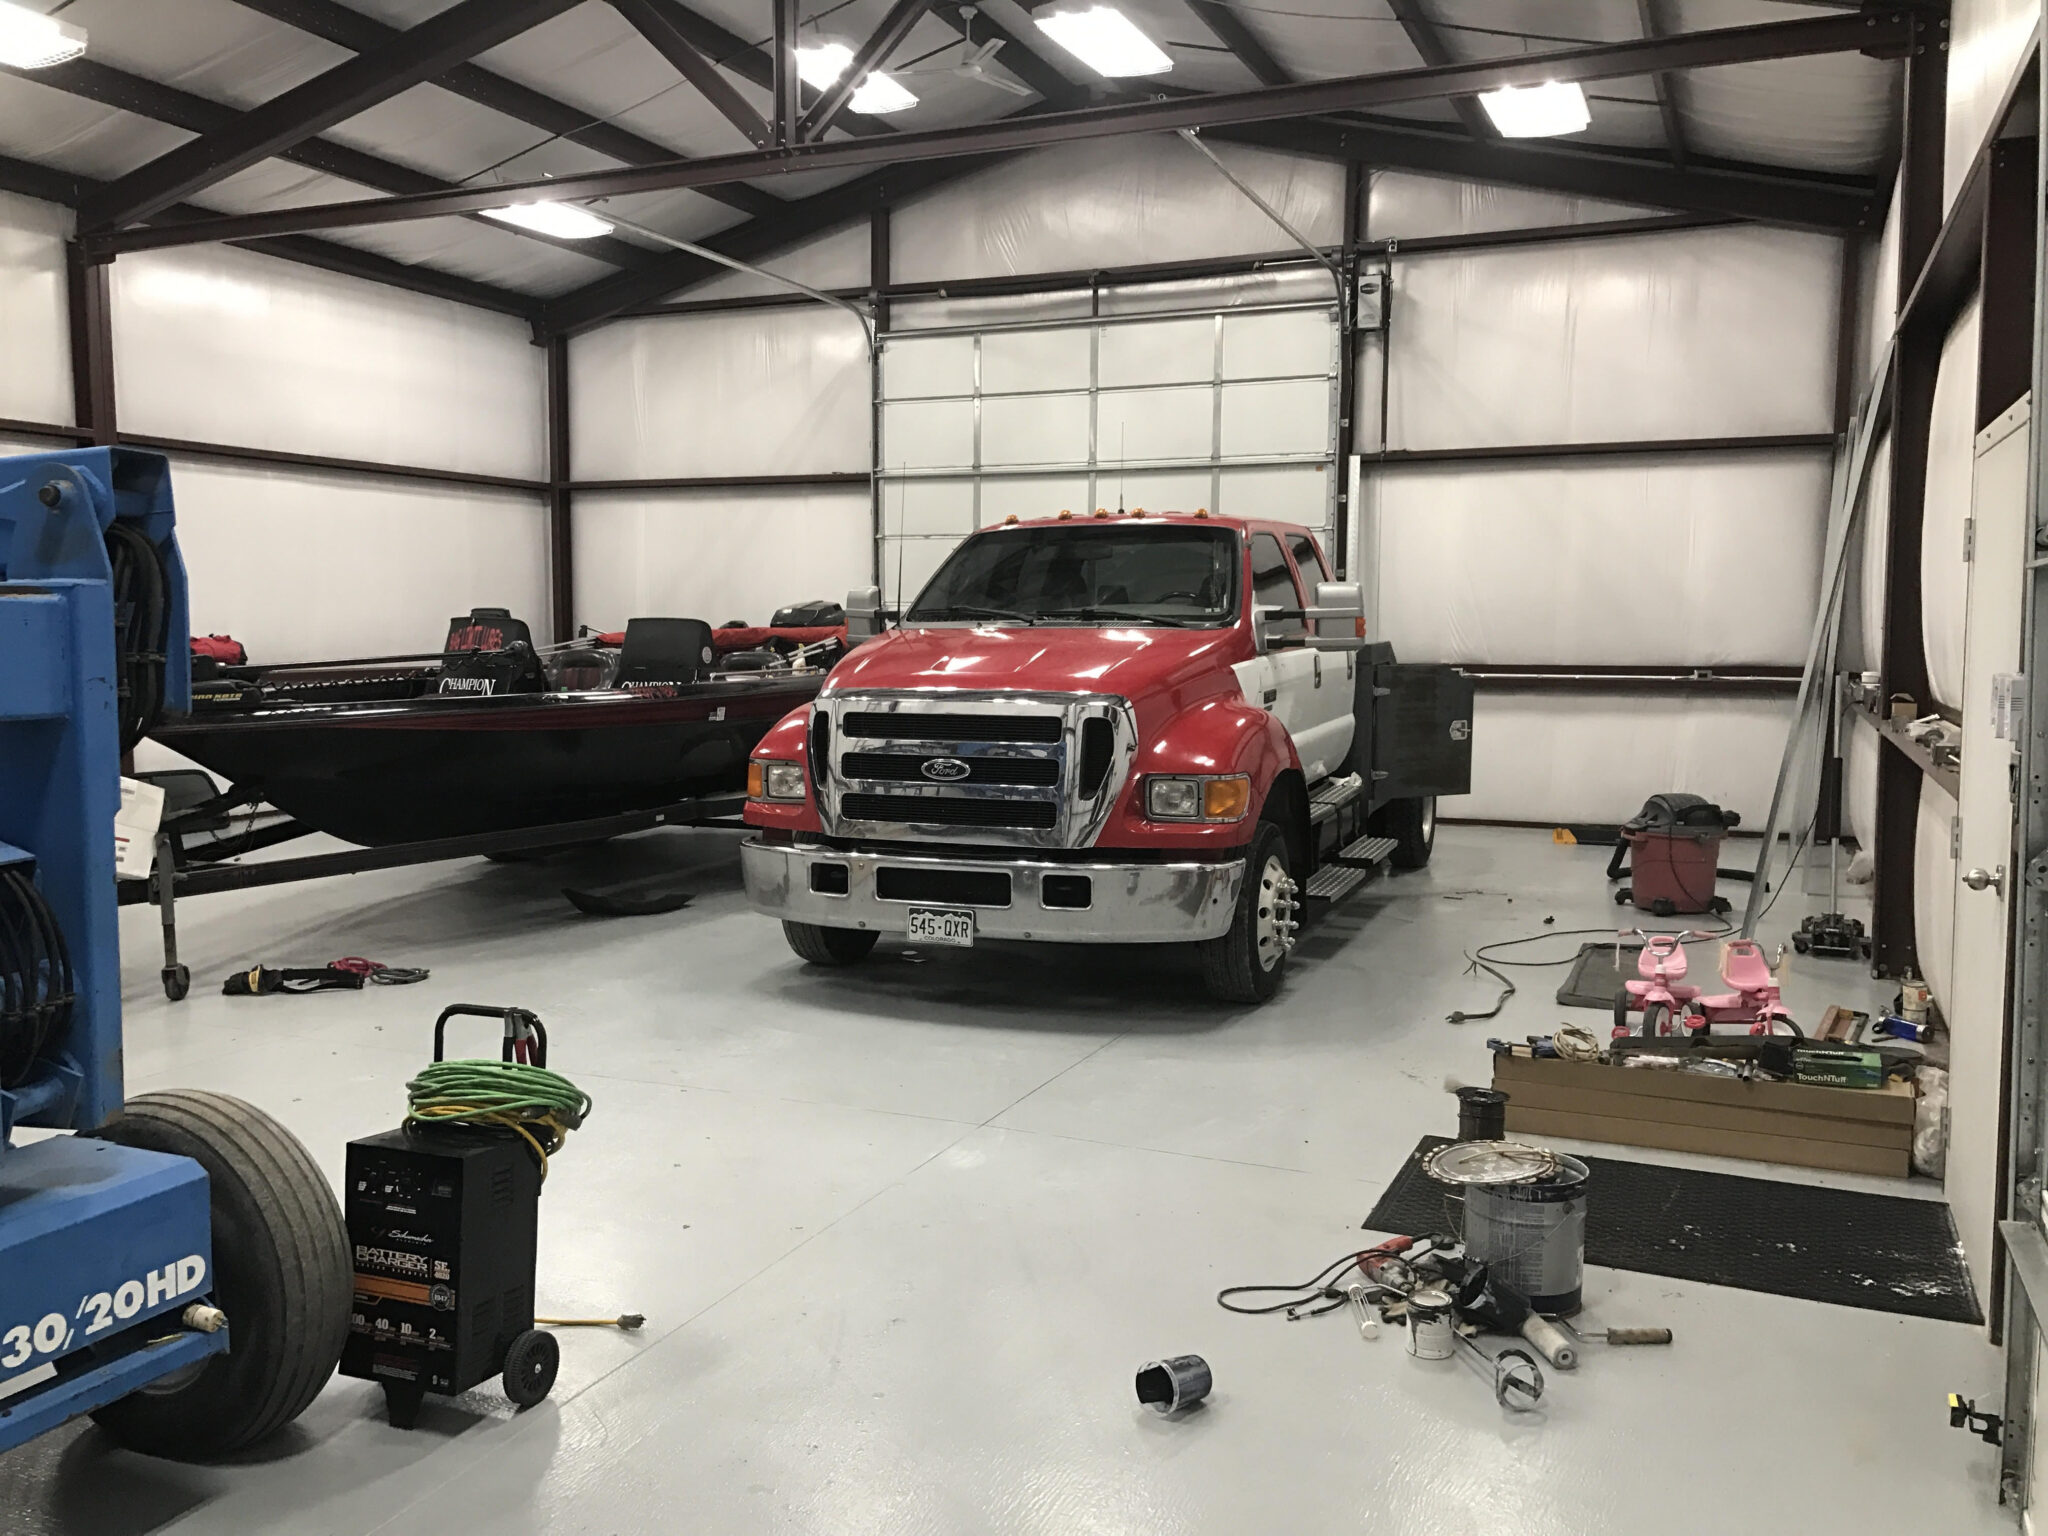 40x50x16 Garage and Boat Workshop Building in Colorado